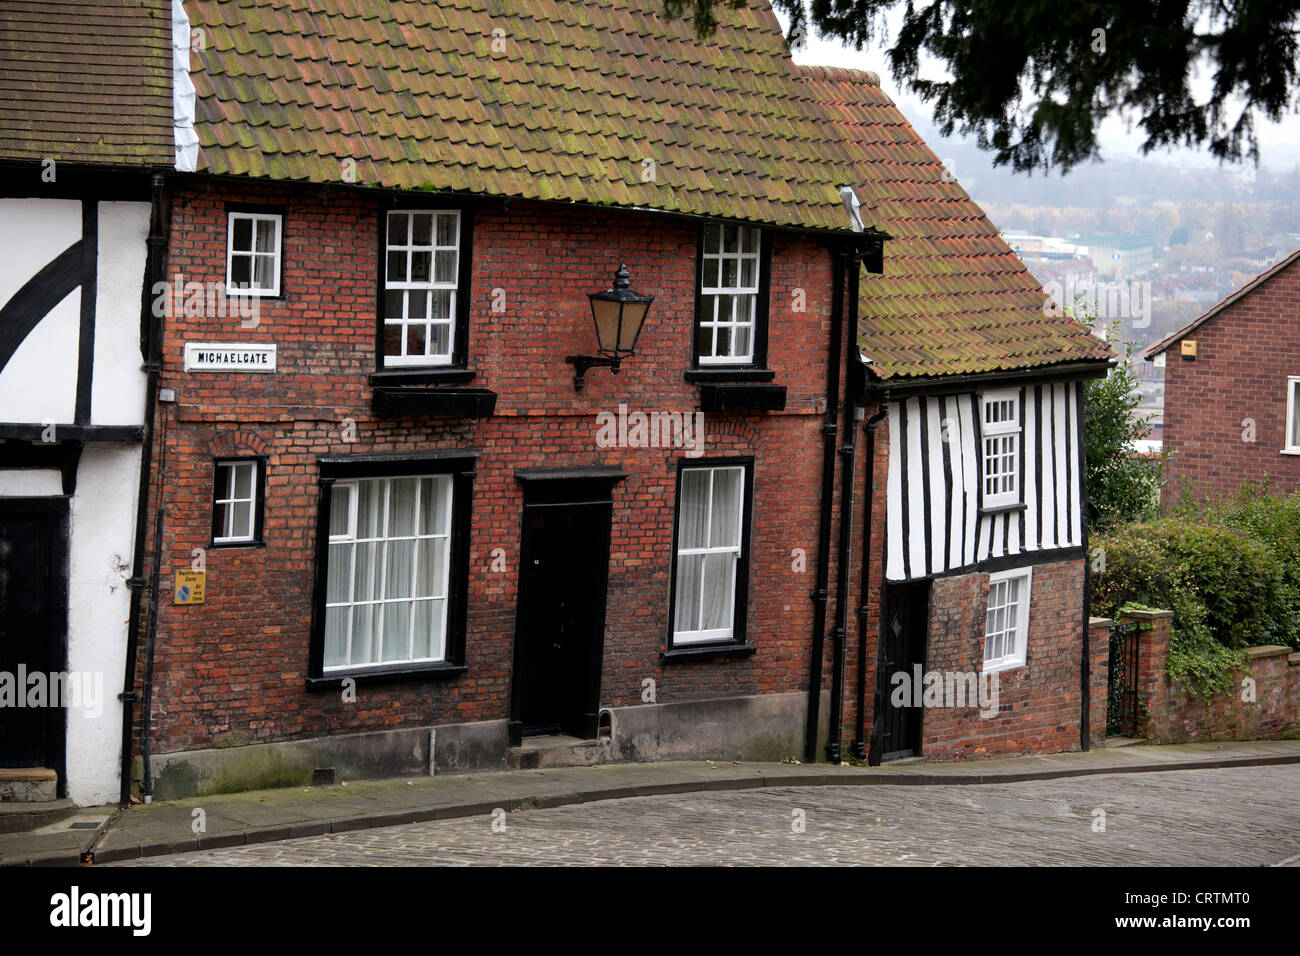 Quaint houses in Michaelgate near the Bailgate area of Upper Lincoln, England, UK. Stock Photo